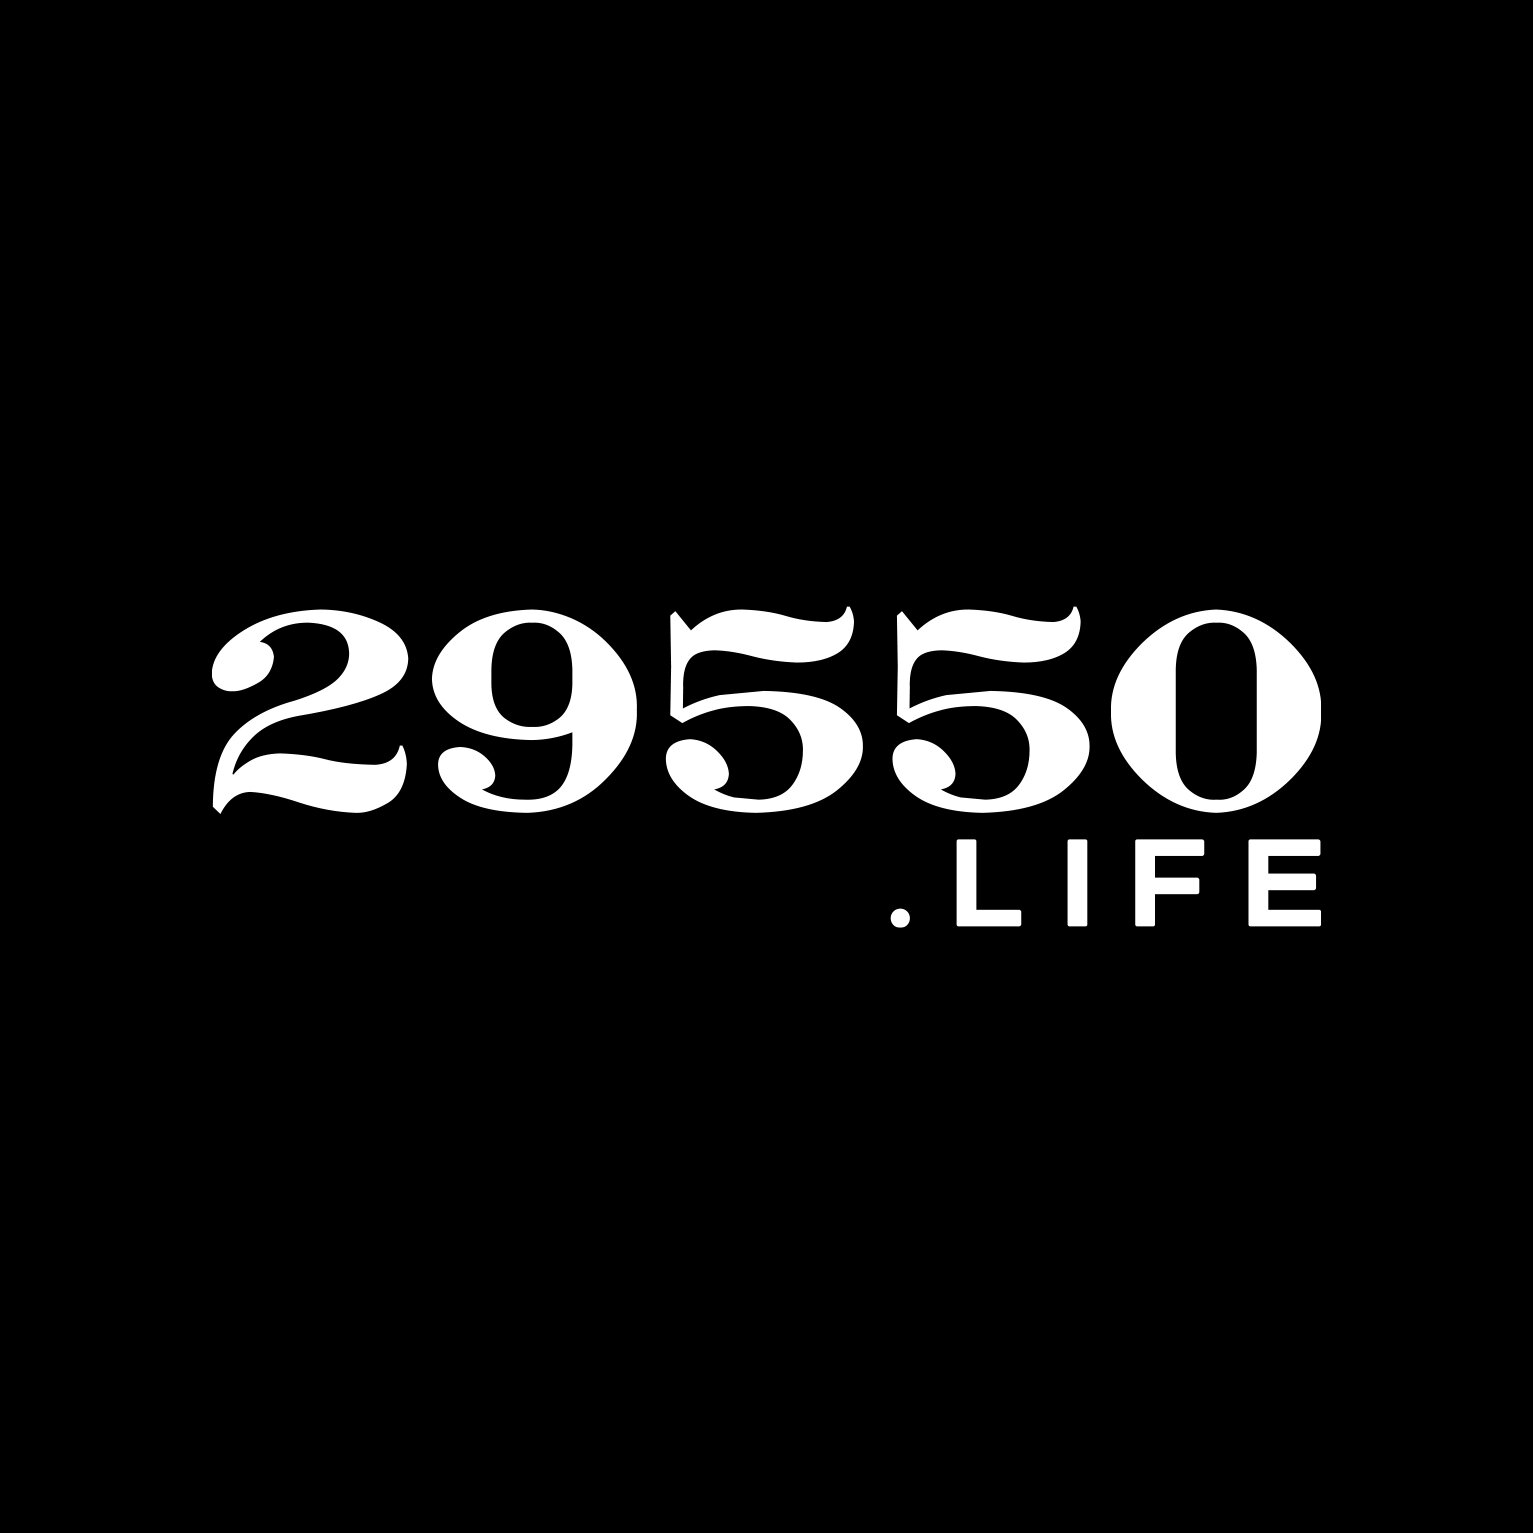 29550 Life